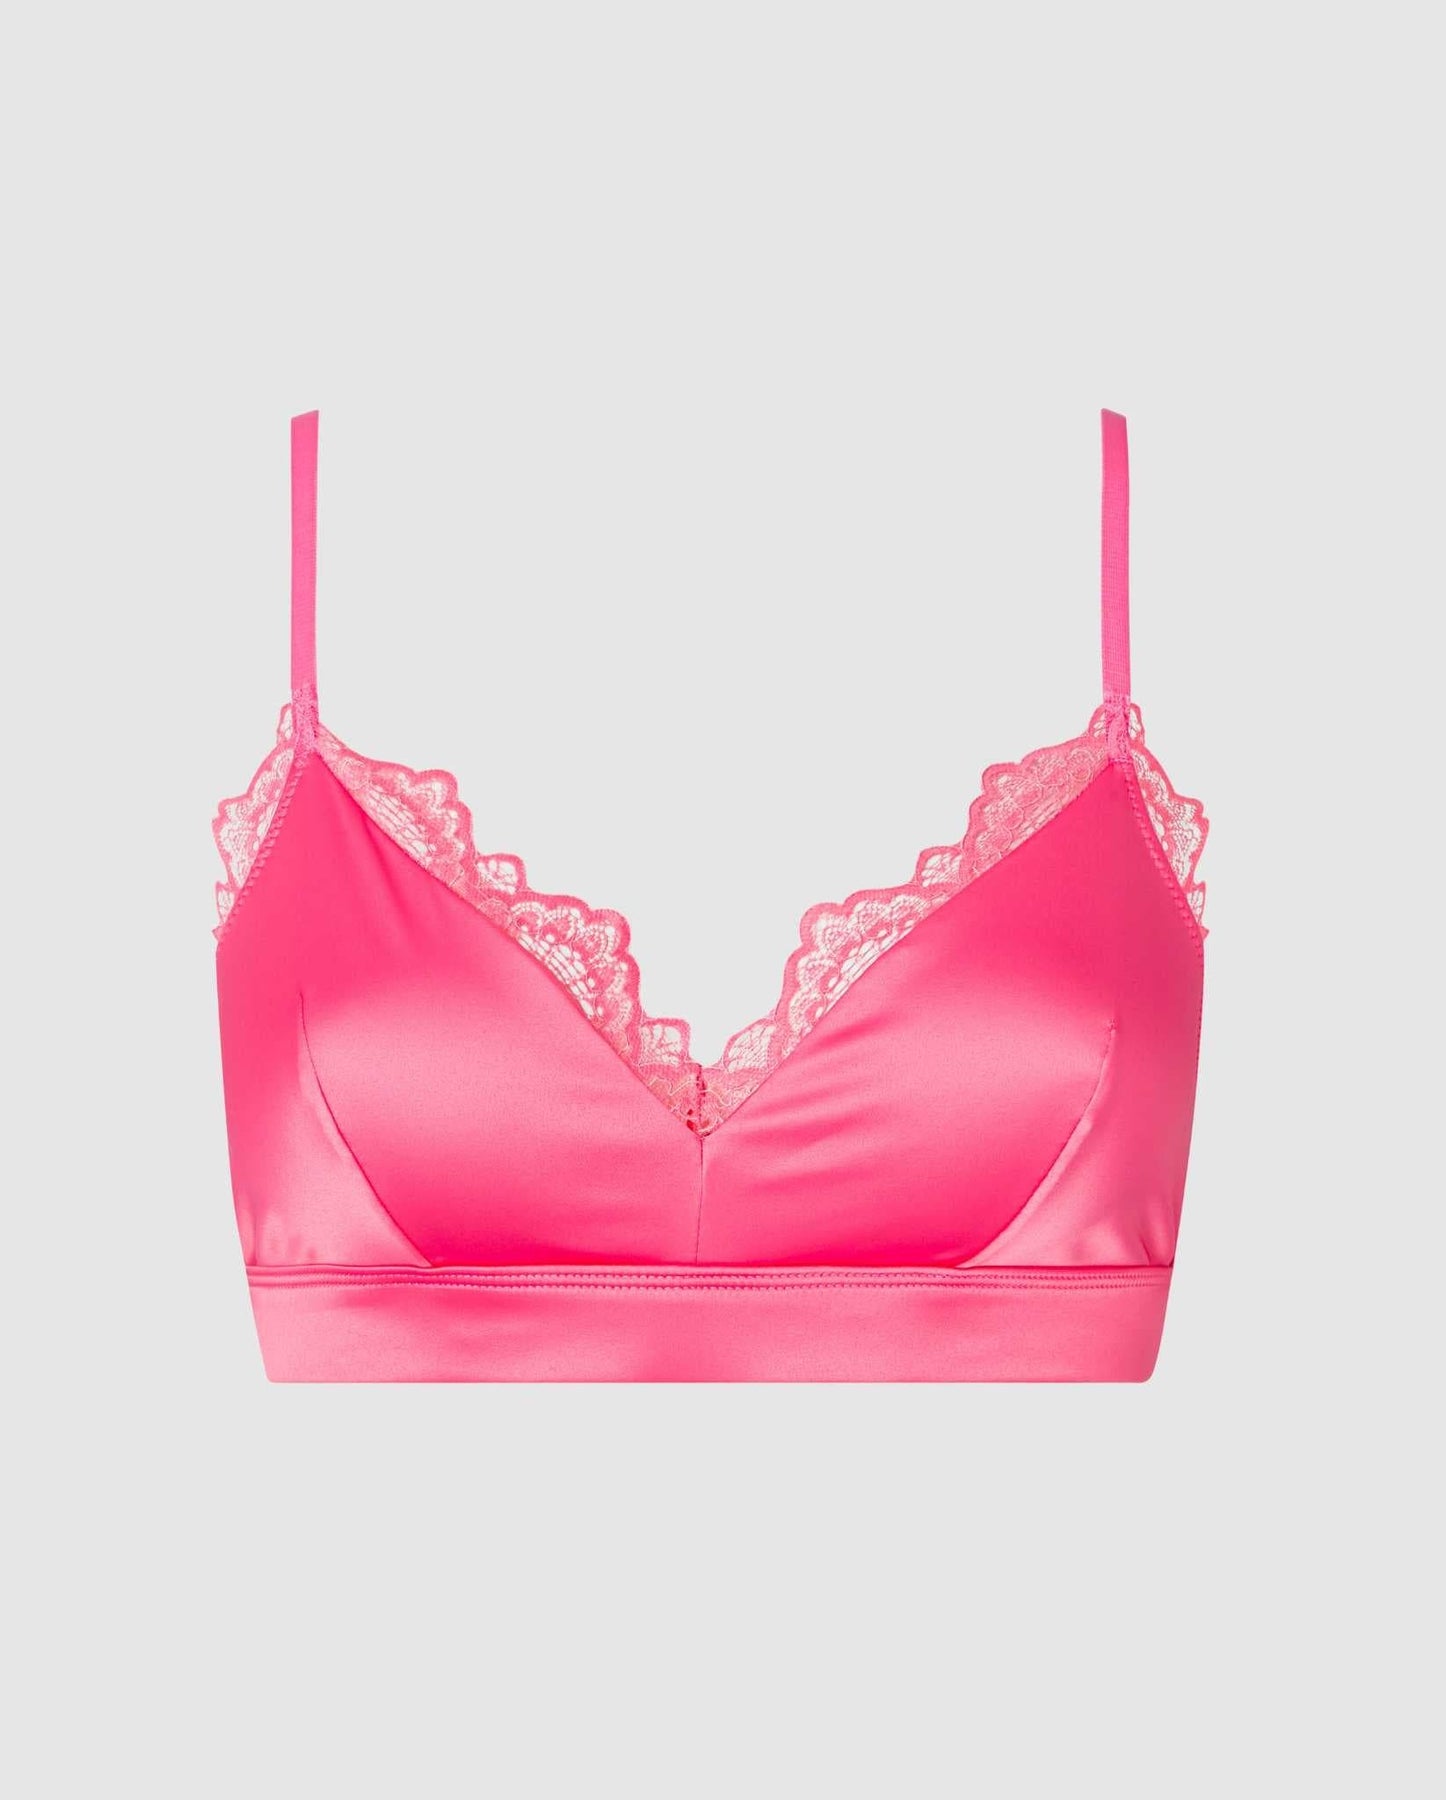 Sexy Light Pink Bralette - Lace Bralette - Triangle Top Bralette - Lulus